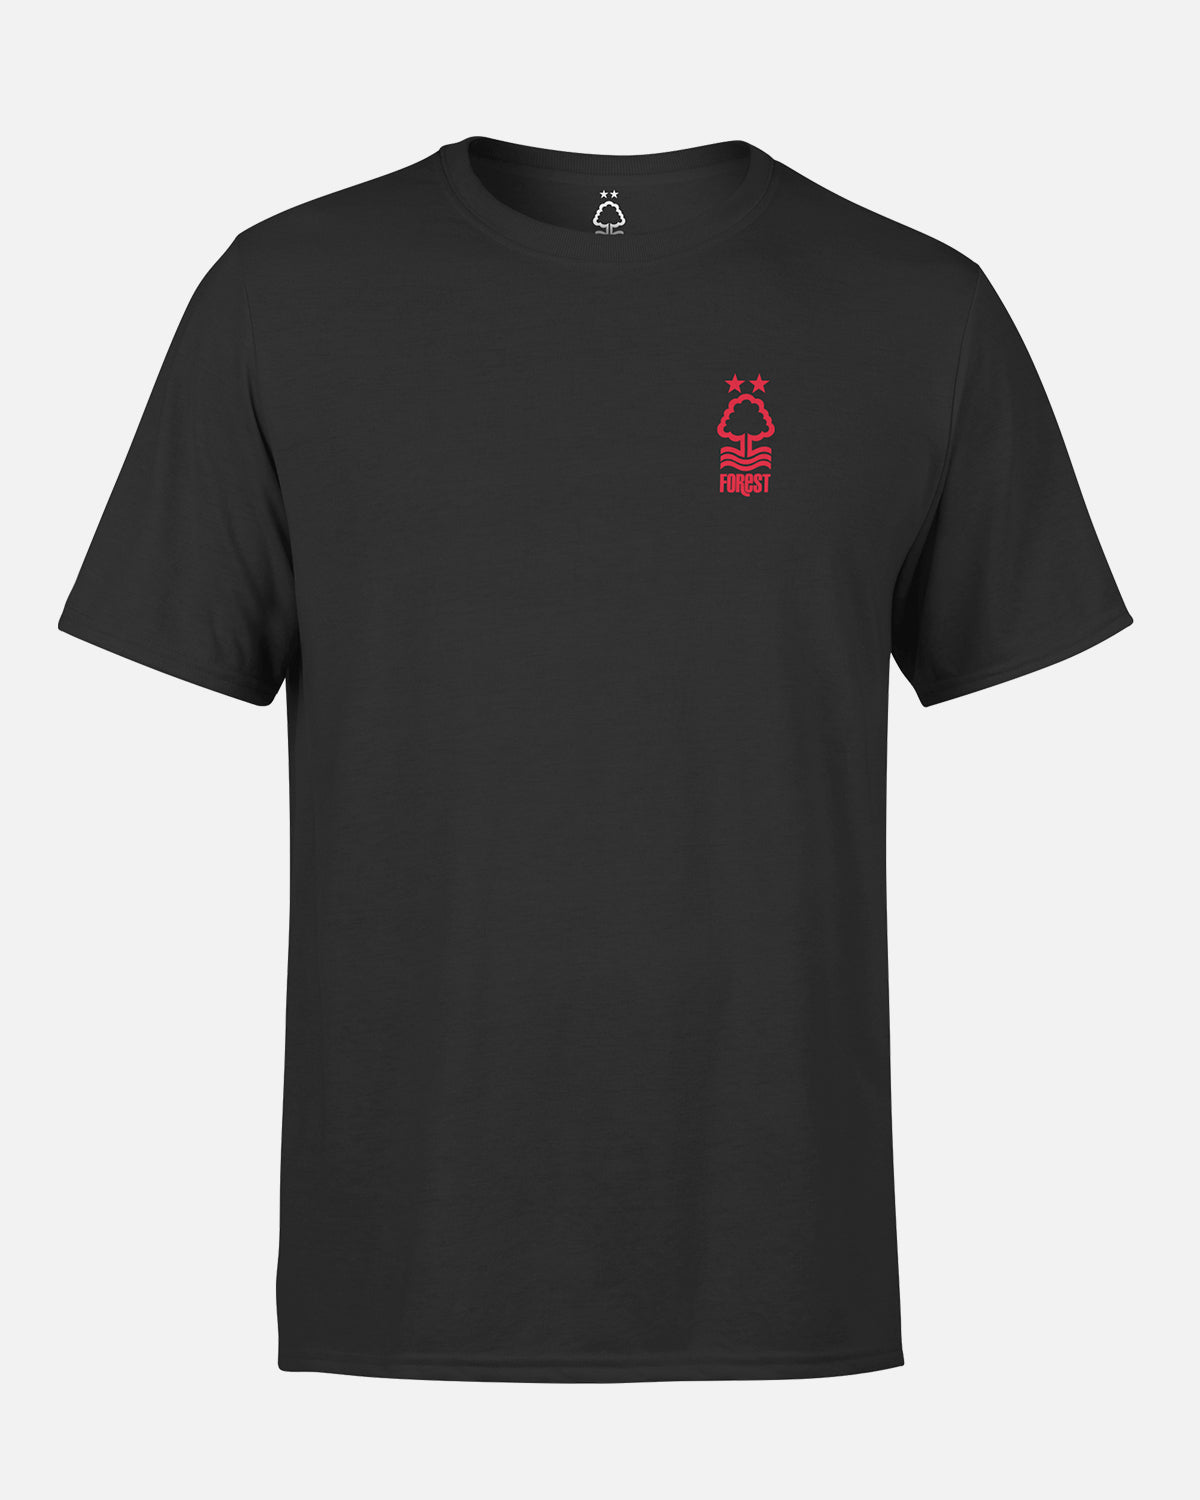 NFFC Black Vertical T-Shirt